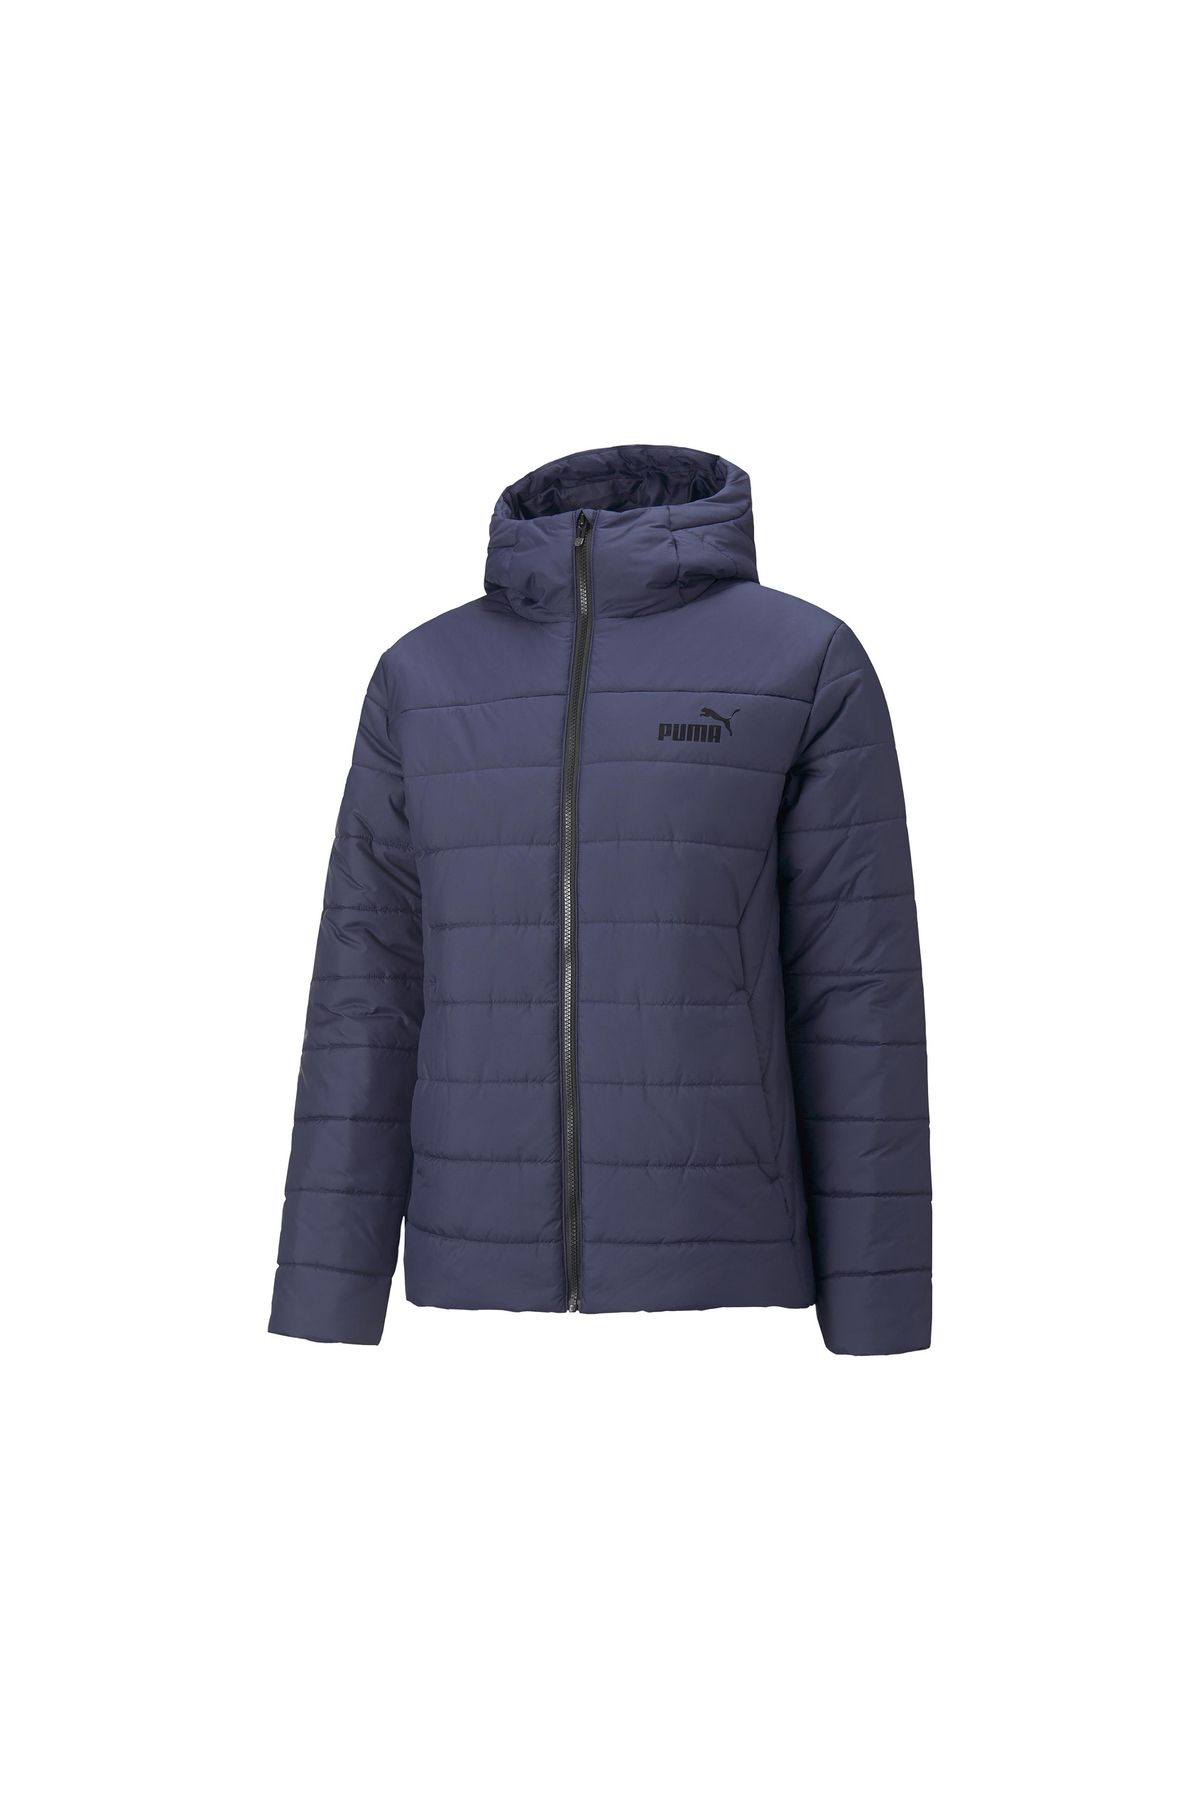 Trendyol Jacket Padded - Navy Blue Casual Puma Men\'s Ess Hooded 84893806 Coat